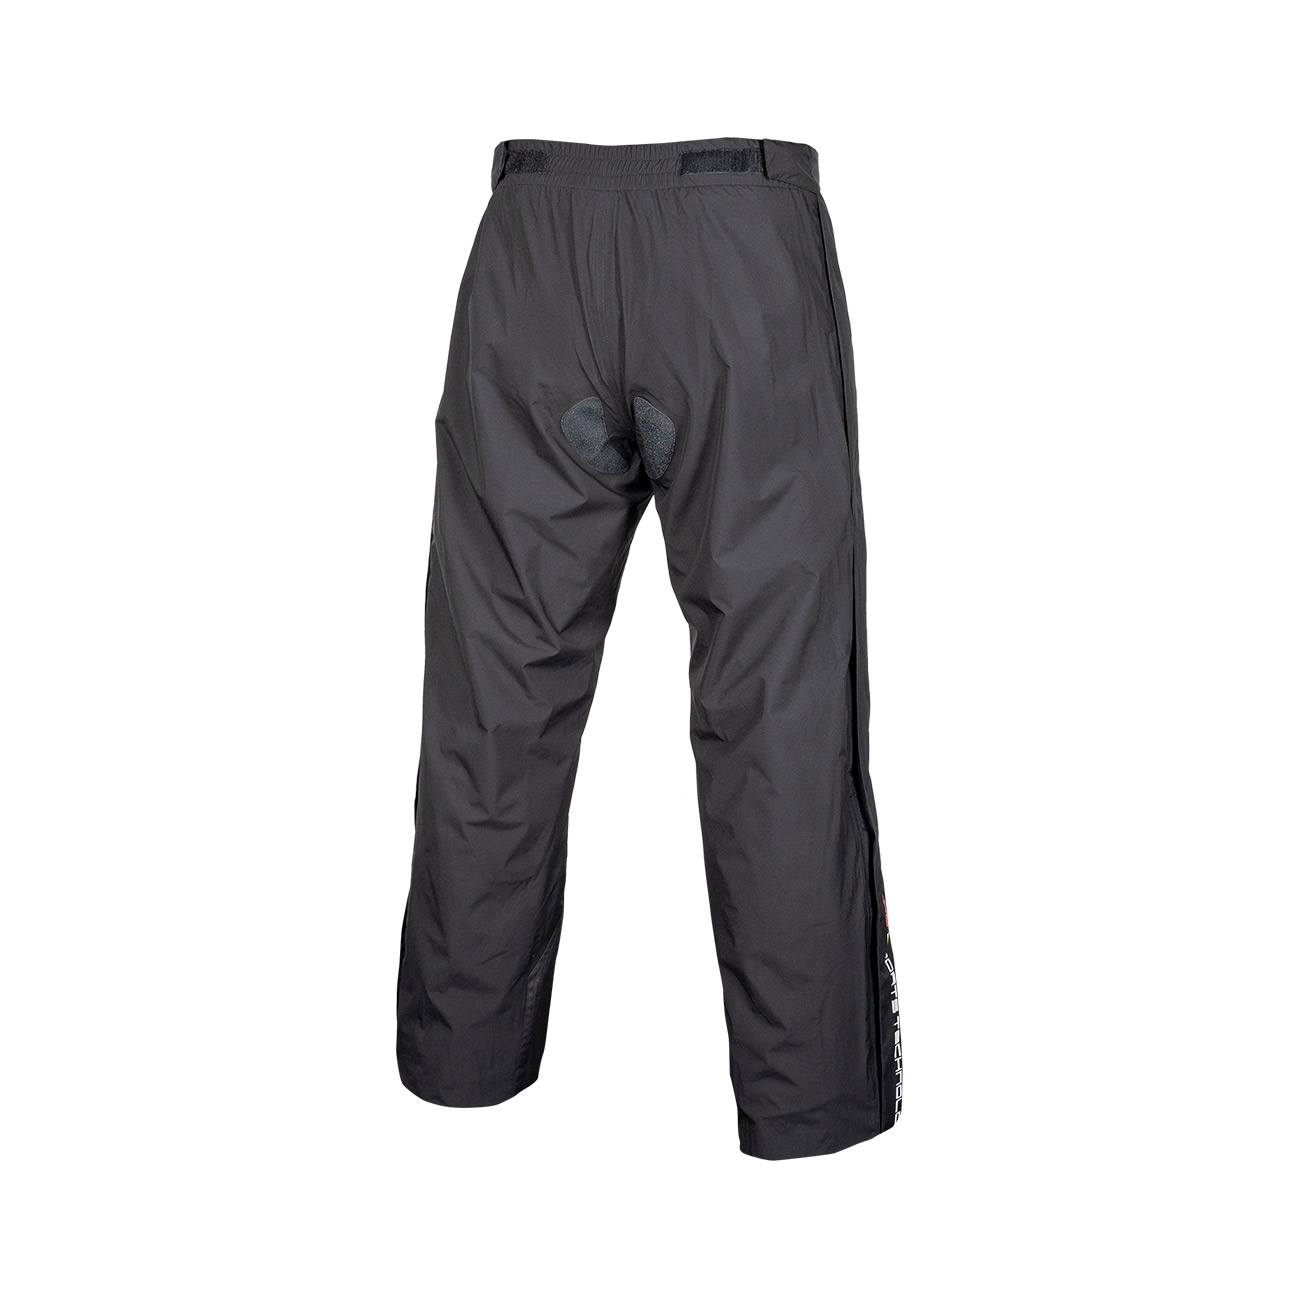 Rainblock Zip Base waterproof over-pants